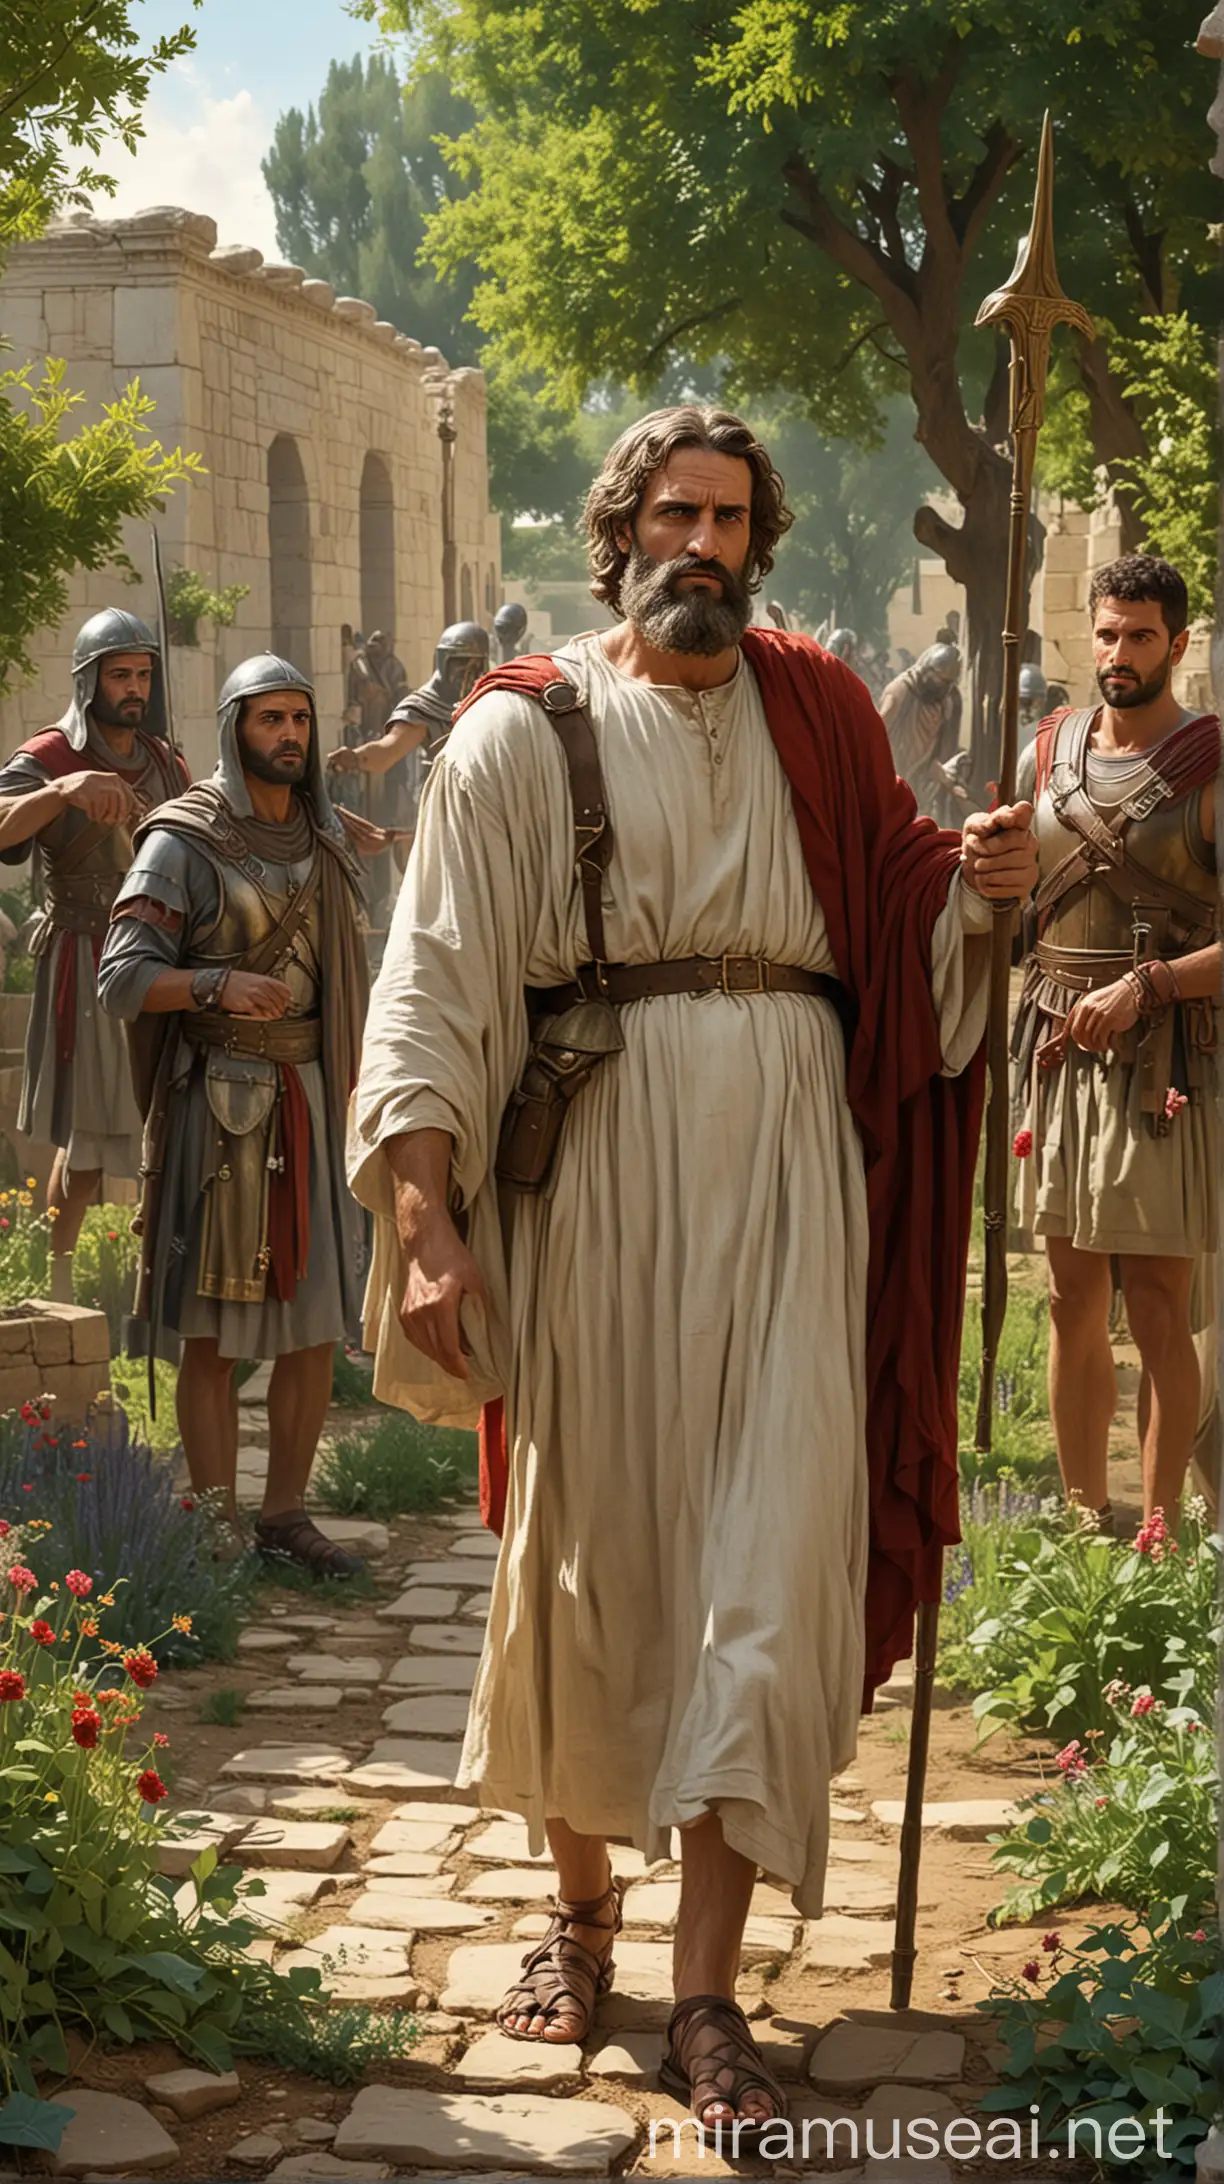 Greek Servant of High Priest with Roman Soldiers Apprehending Jesus